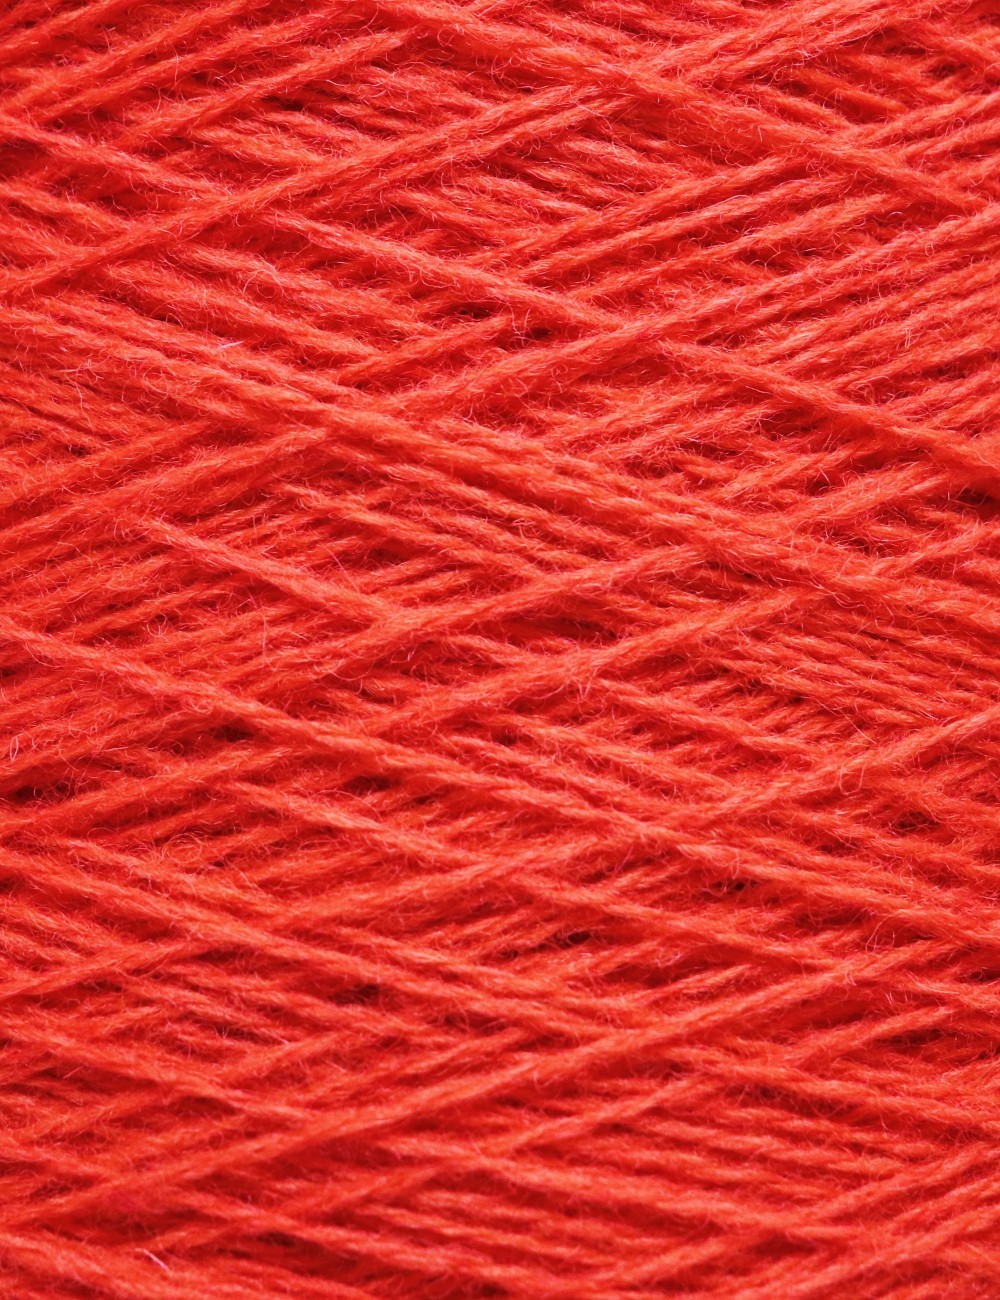 Uldgarn i klar orange rød farve 108